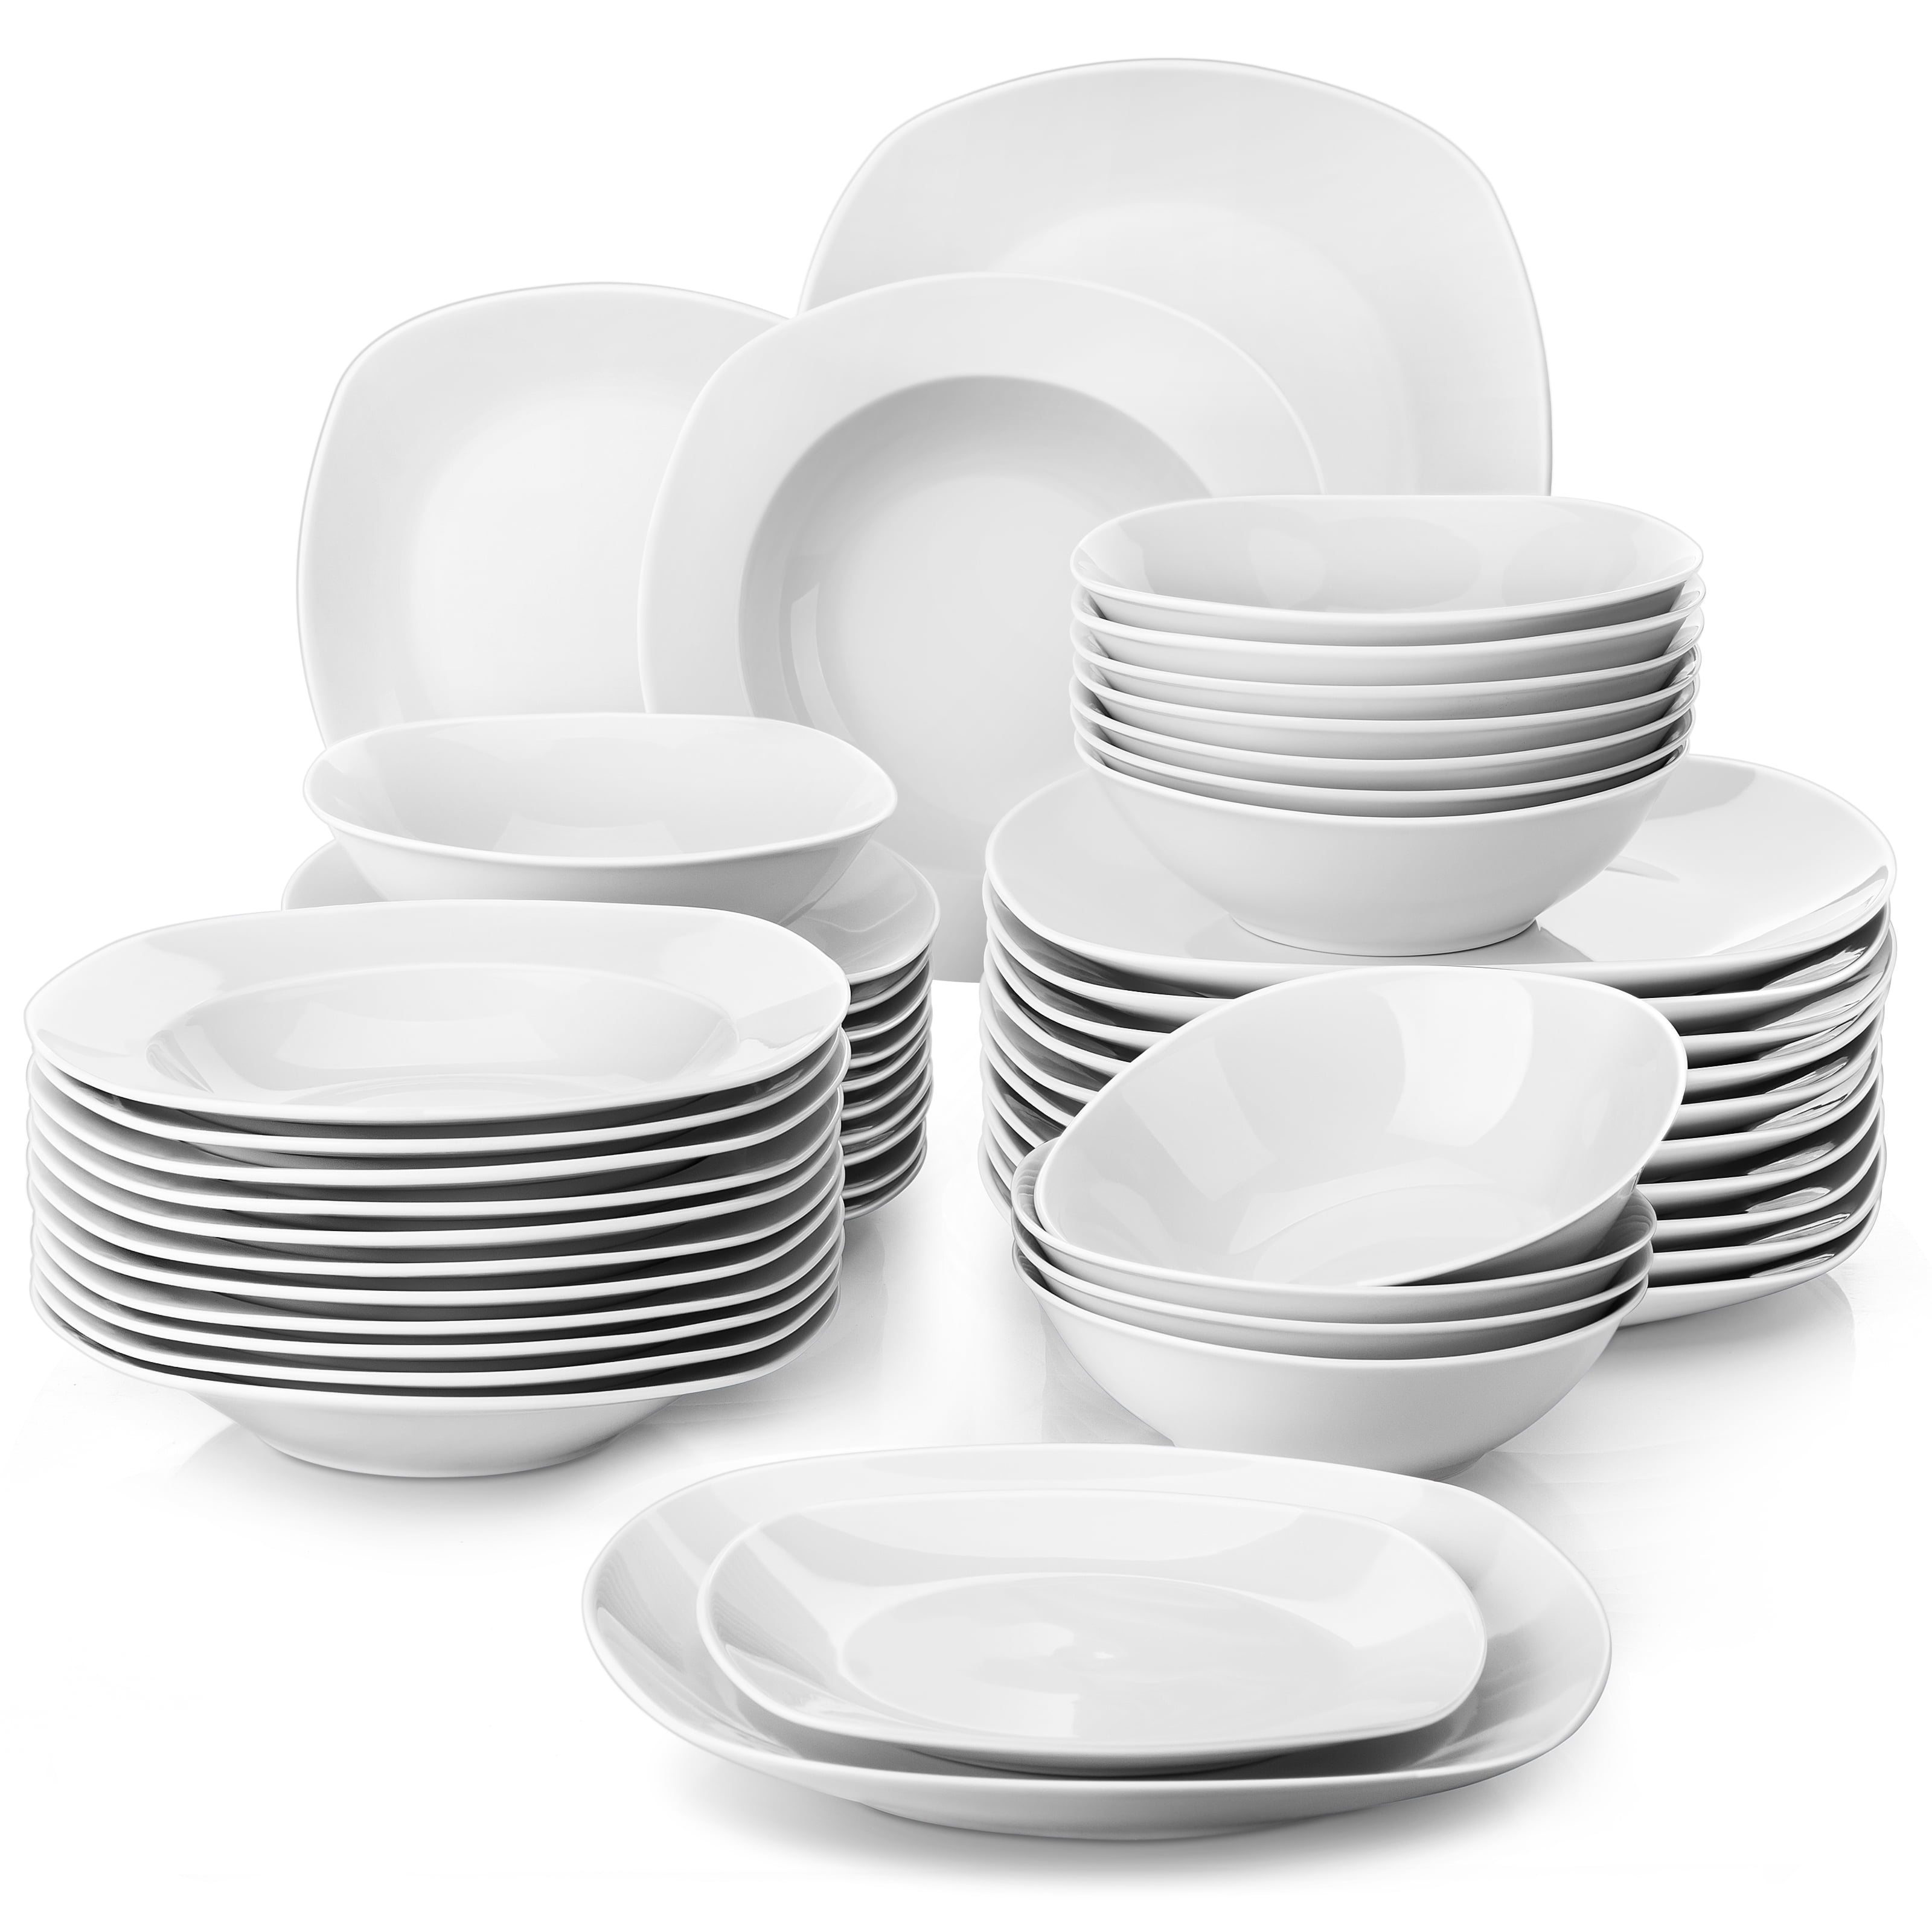 Service for 6 Series Elisa Serving Plates Salad Pasta Bowls Plates MALACASA Square White Dinner Sets 18-Pieces Porcelain Dishes Dinnerware Set 